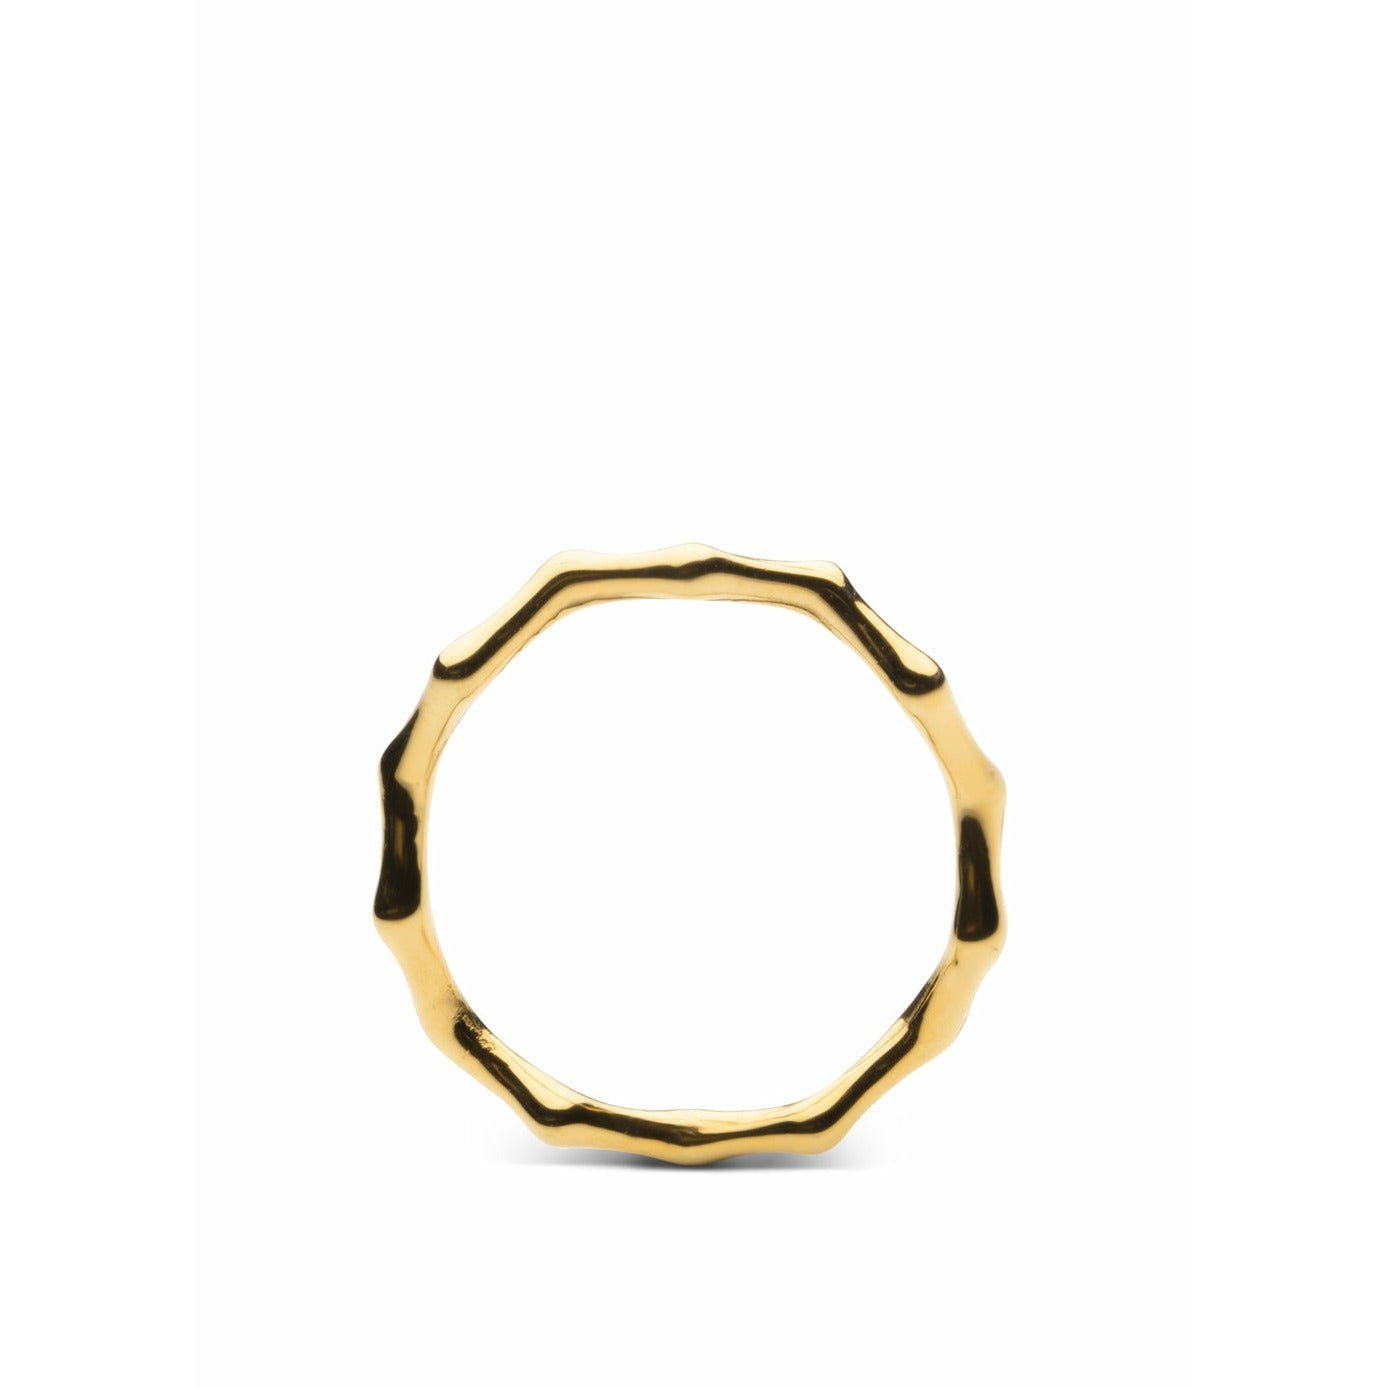 Skultuna Bambu Ring Malé zlaté pokovené, Ø1,6 cm